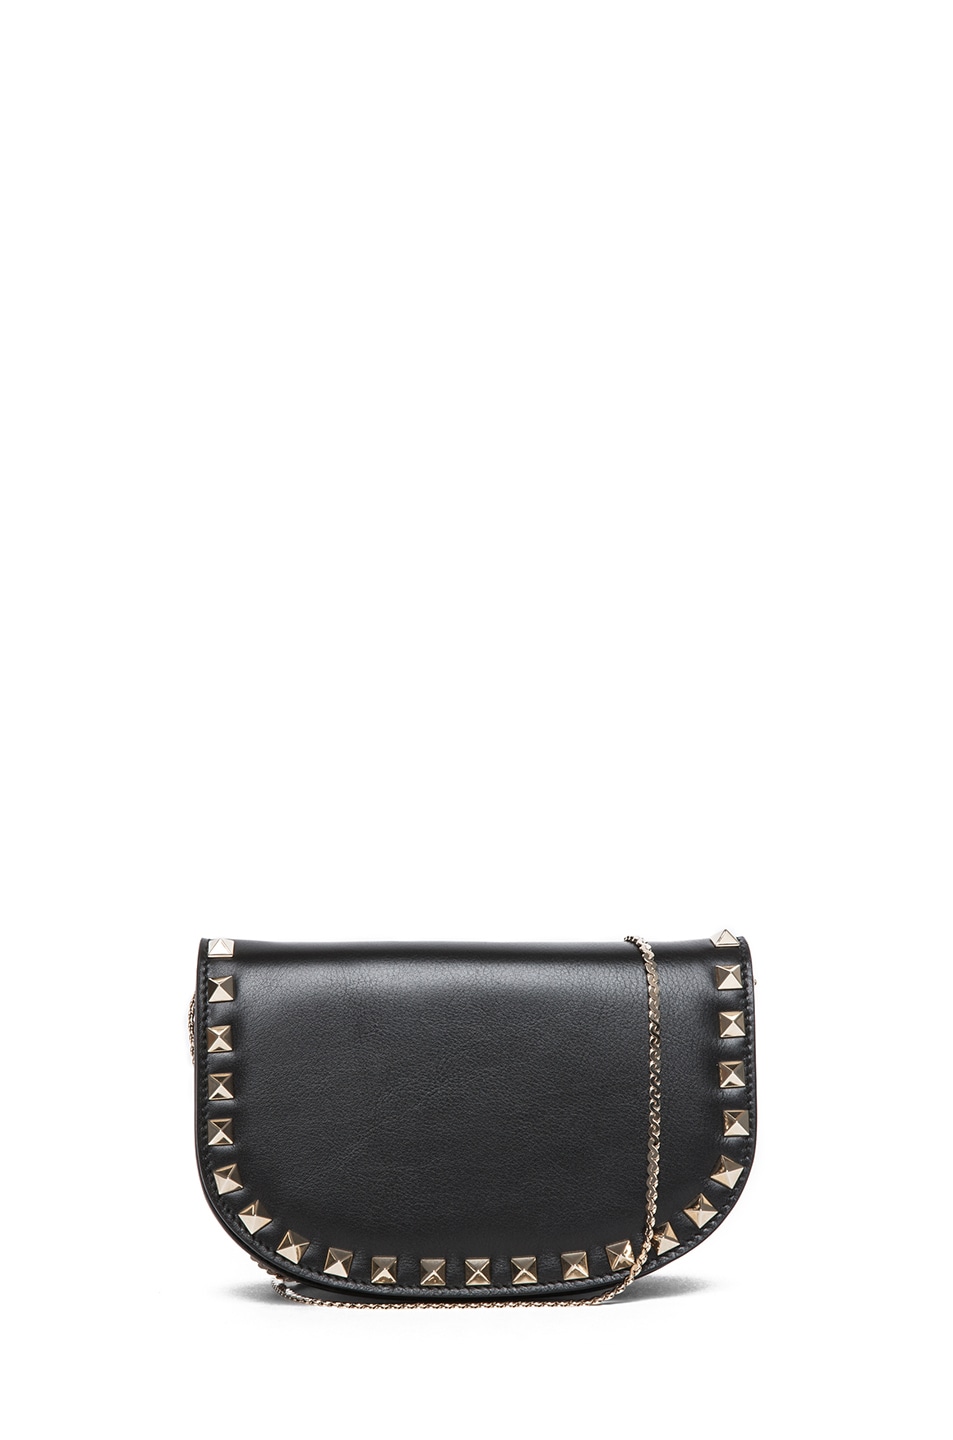 Valentino Mini Round Rockstud Shoulder Bag in Black | FWRD